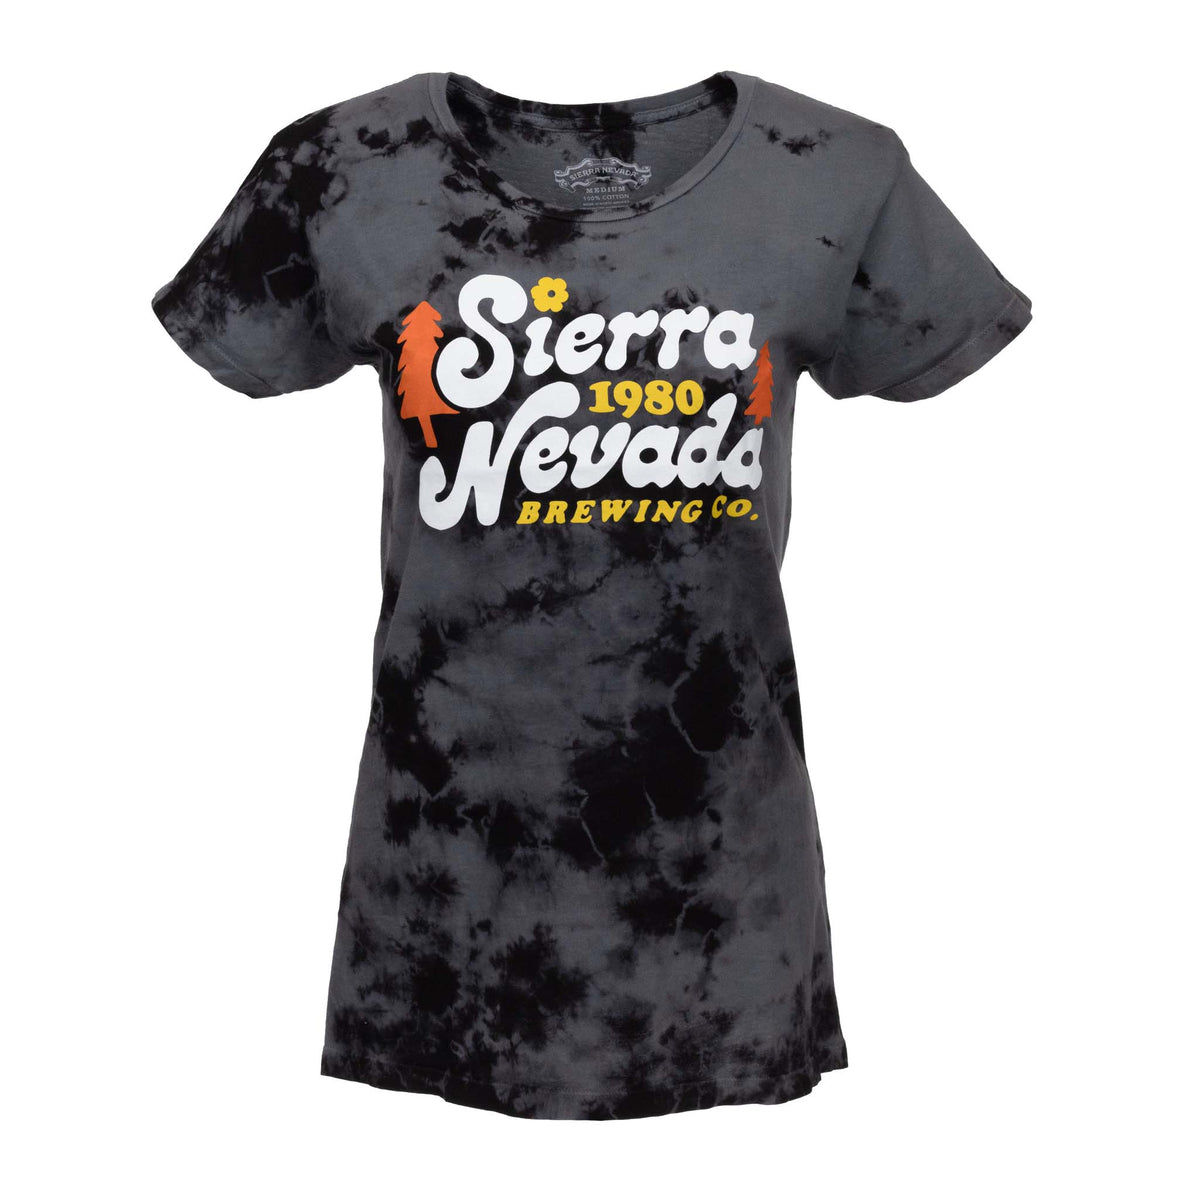 Sierra Nevada Women's Acid Washed Retro Shirt Black - Front view